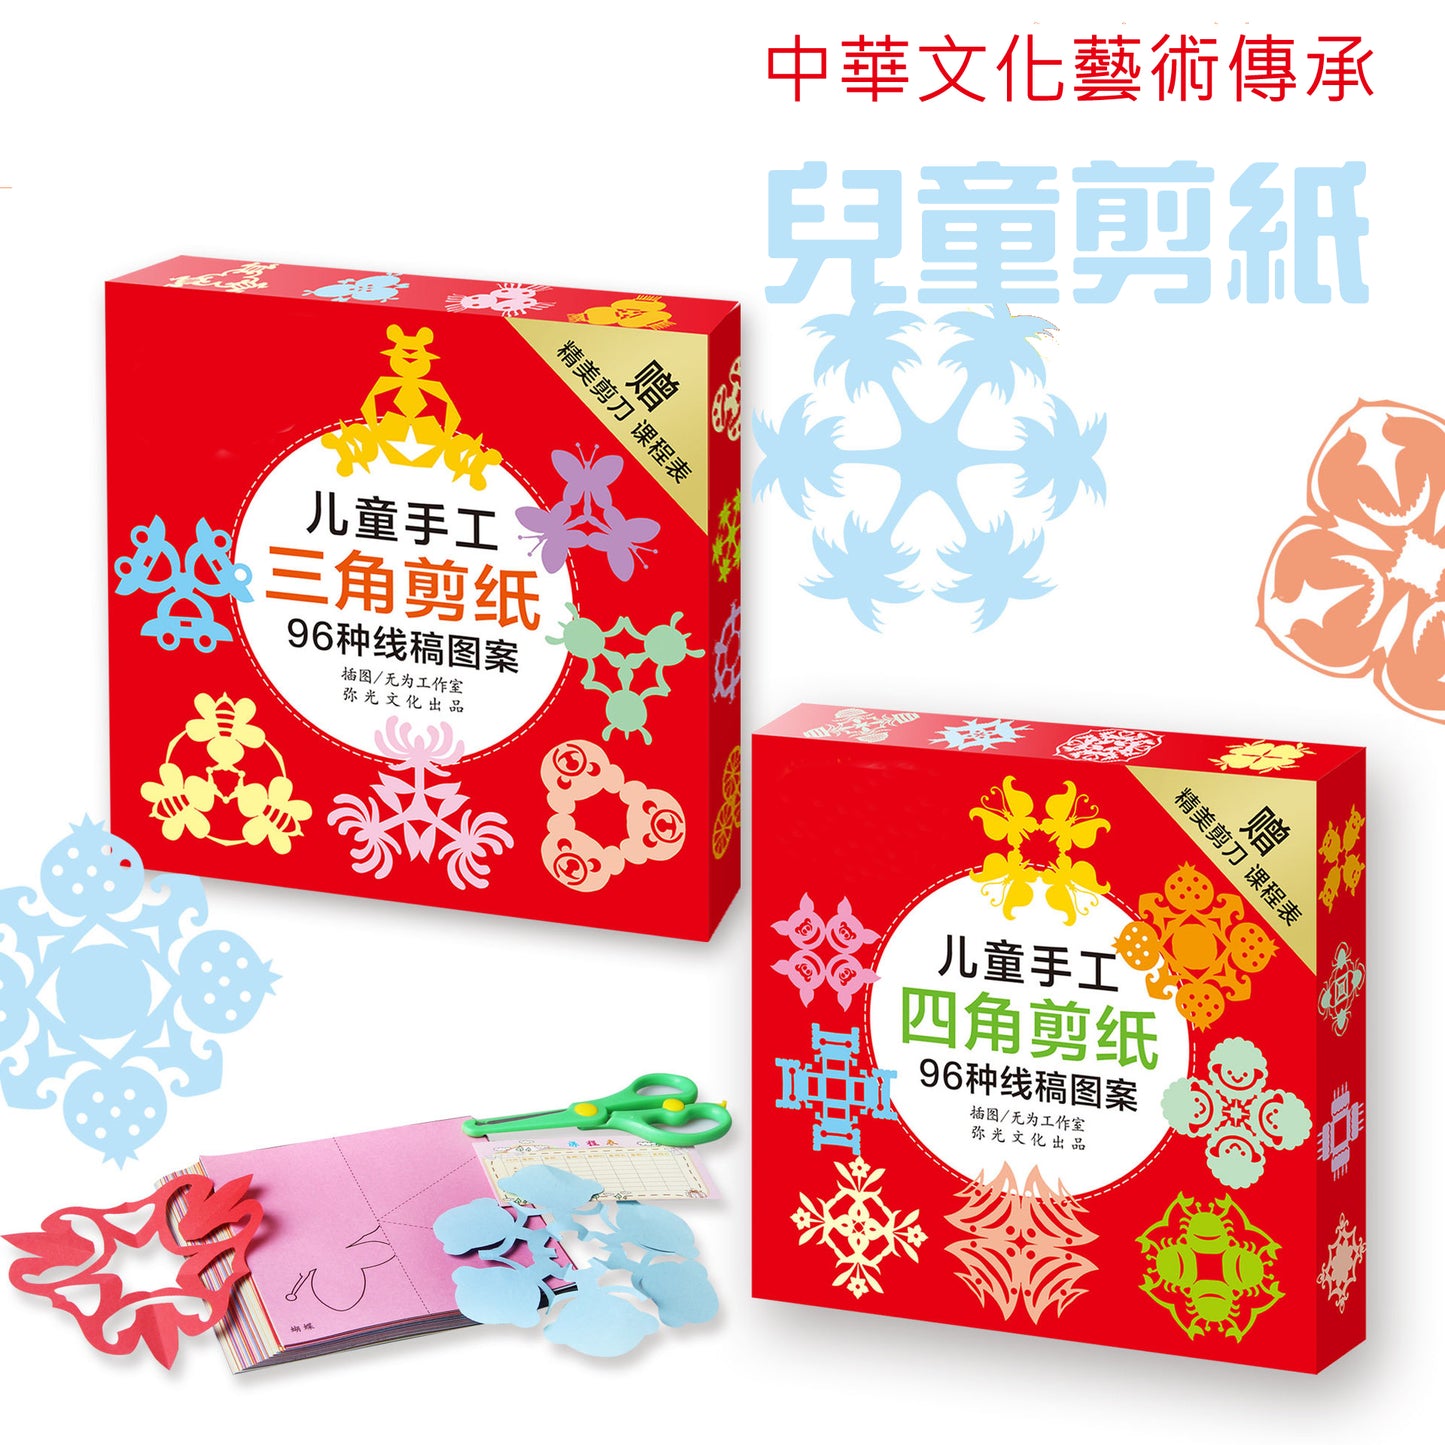 Chinese Folk Art Paper-cutting Set (free safety scissors)  中華文化 - 兒童手工三剪紙套裝 (送安全剪刀)